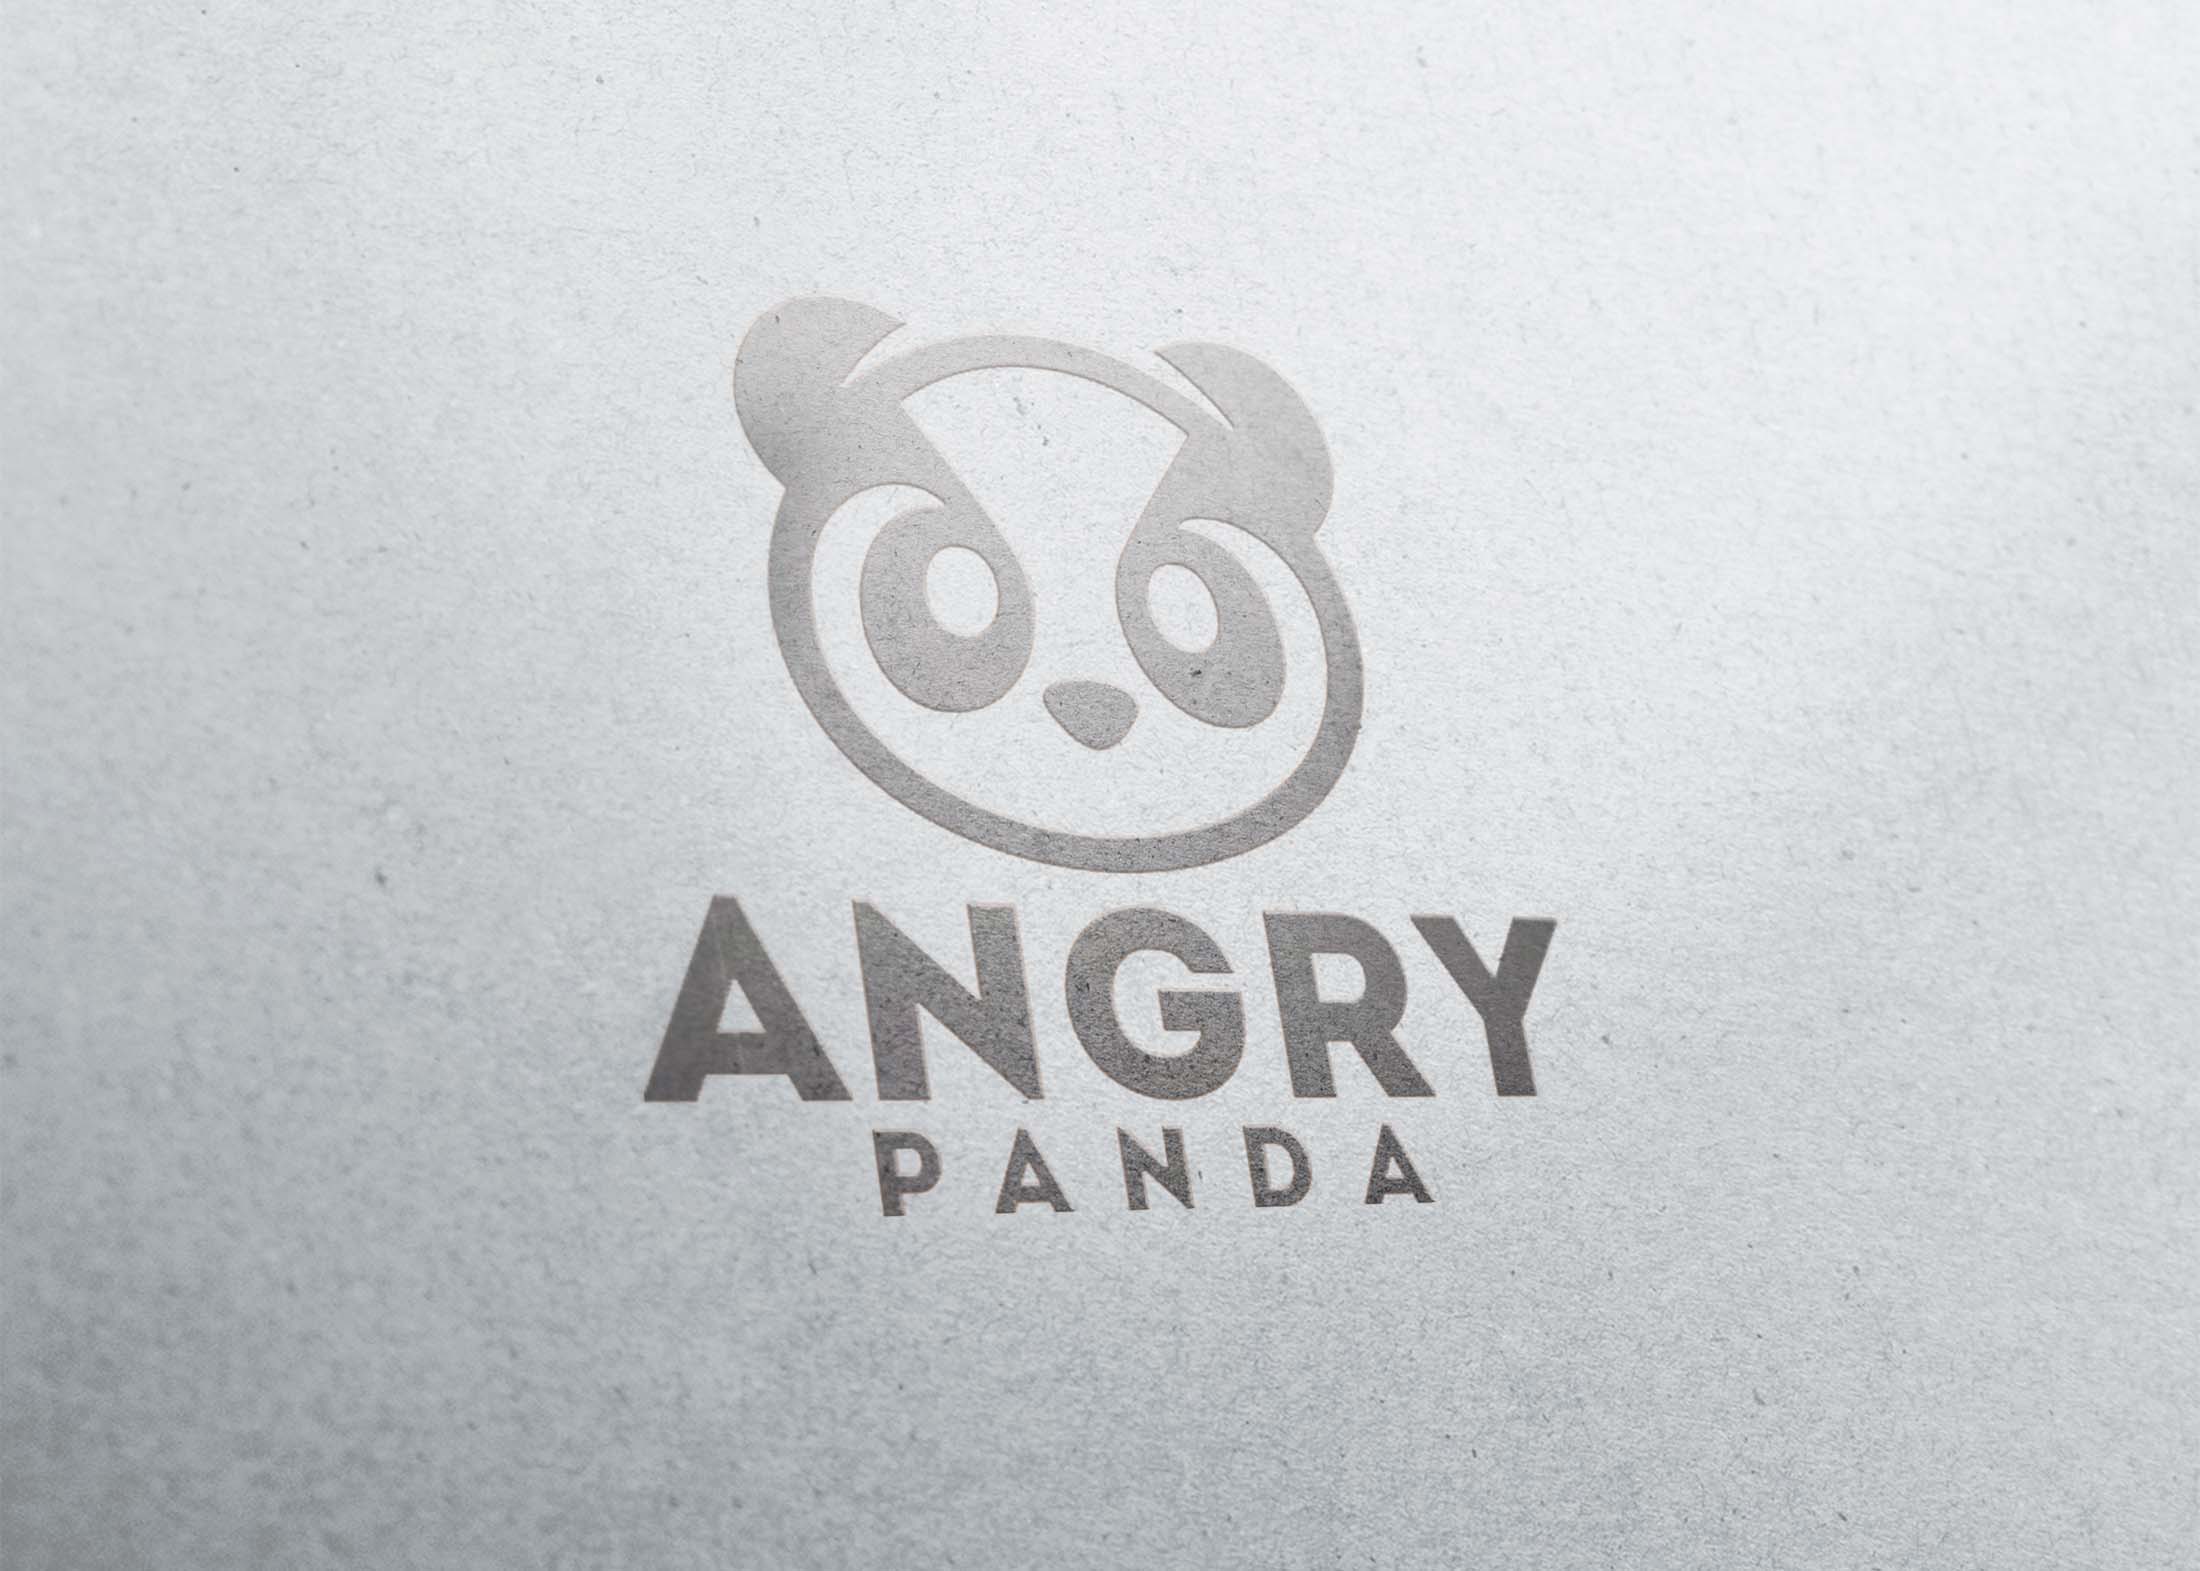 Angry panda Logo Mockup PSD 7